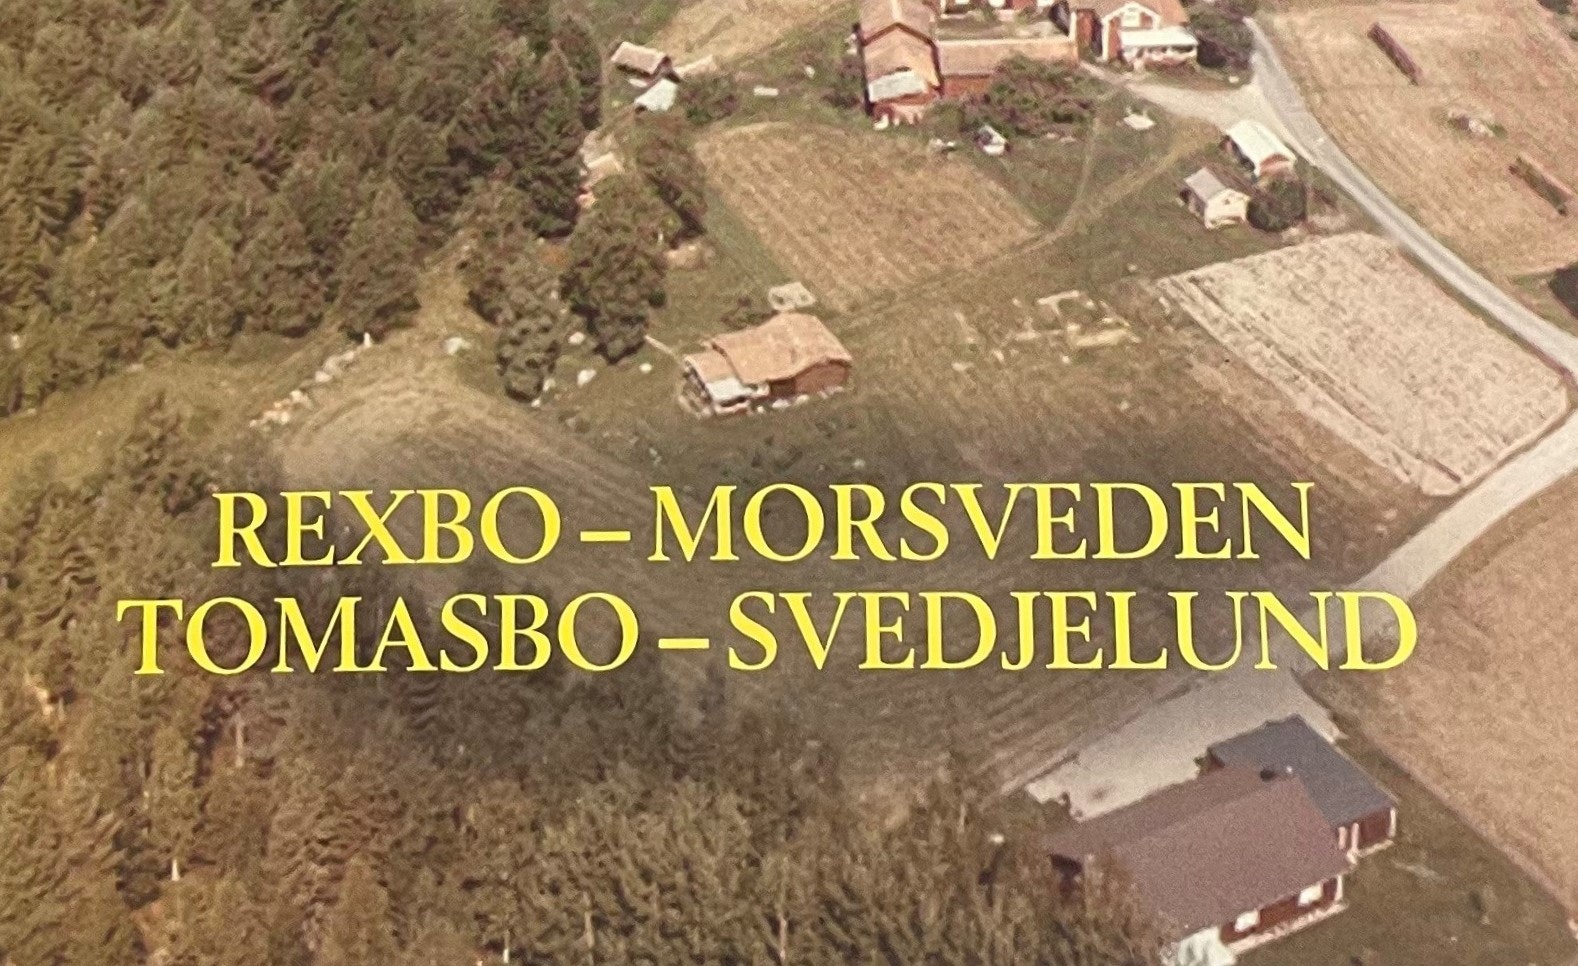 Byboken Rexbo - Morsveden - Tomasbo - Svedjelund